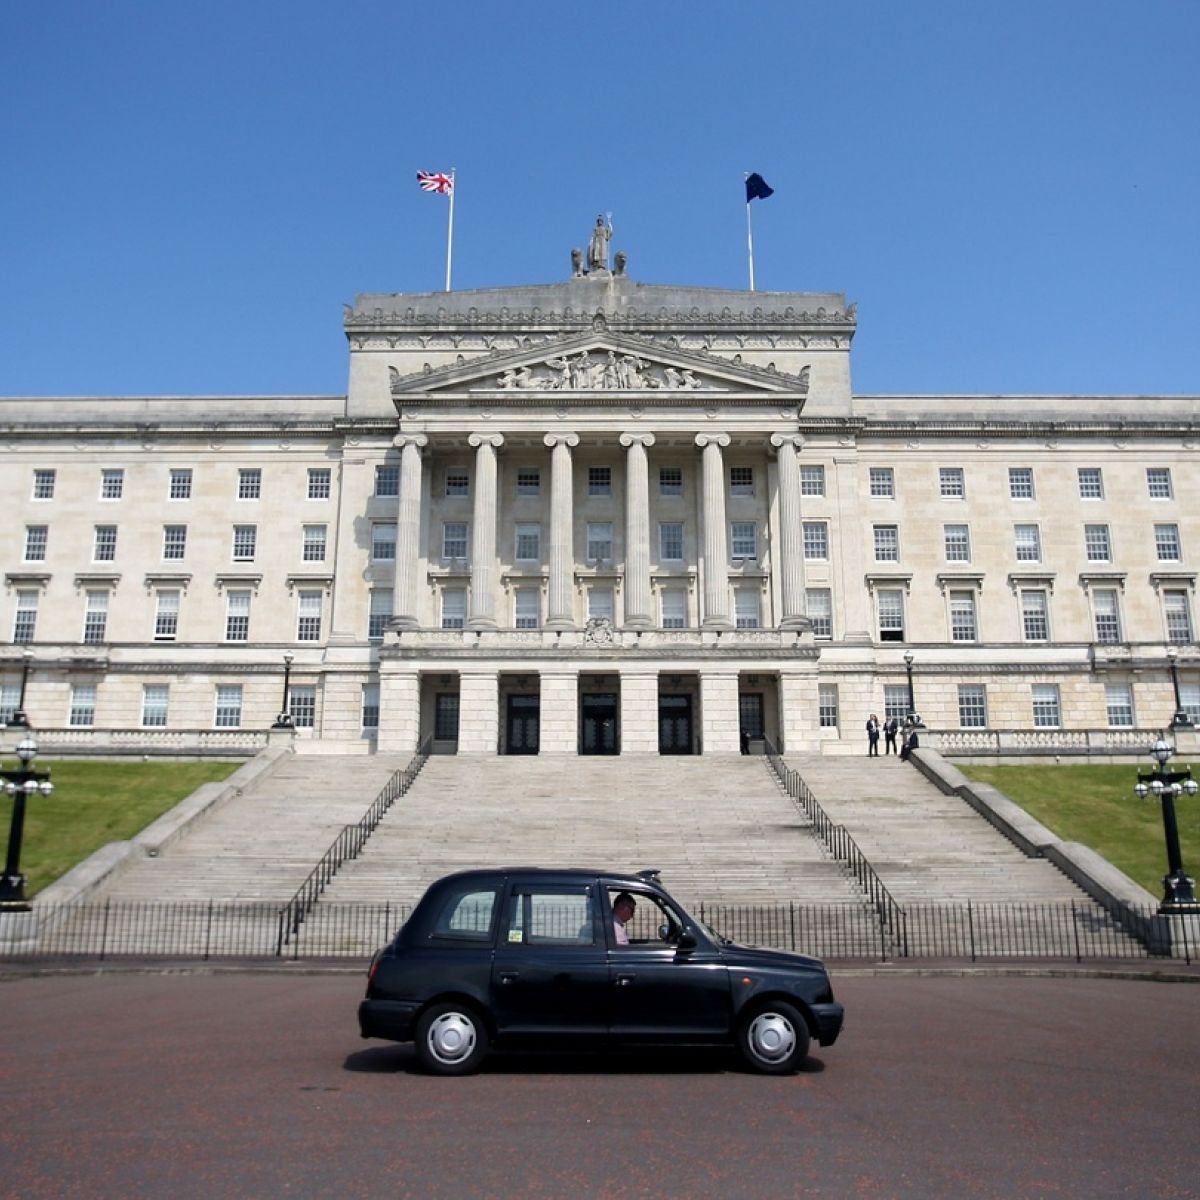 Northern Ireland parliamentary buildings